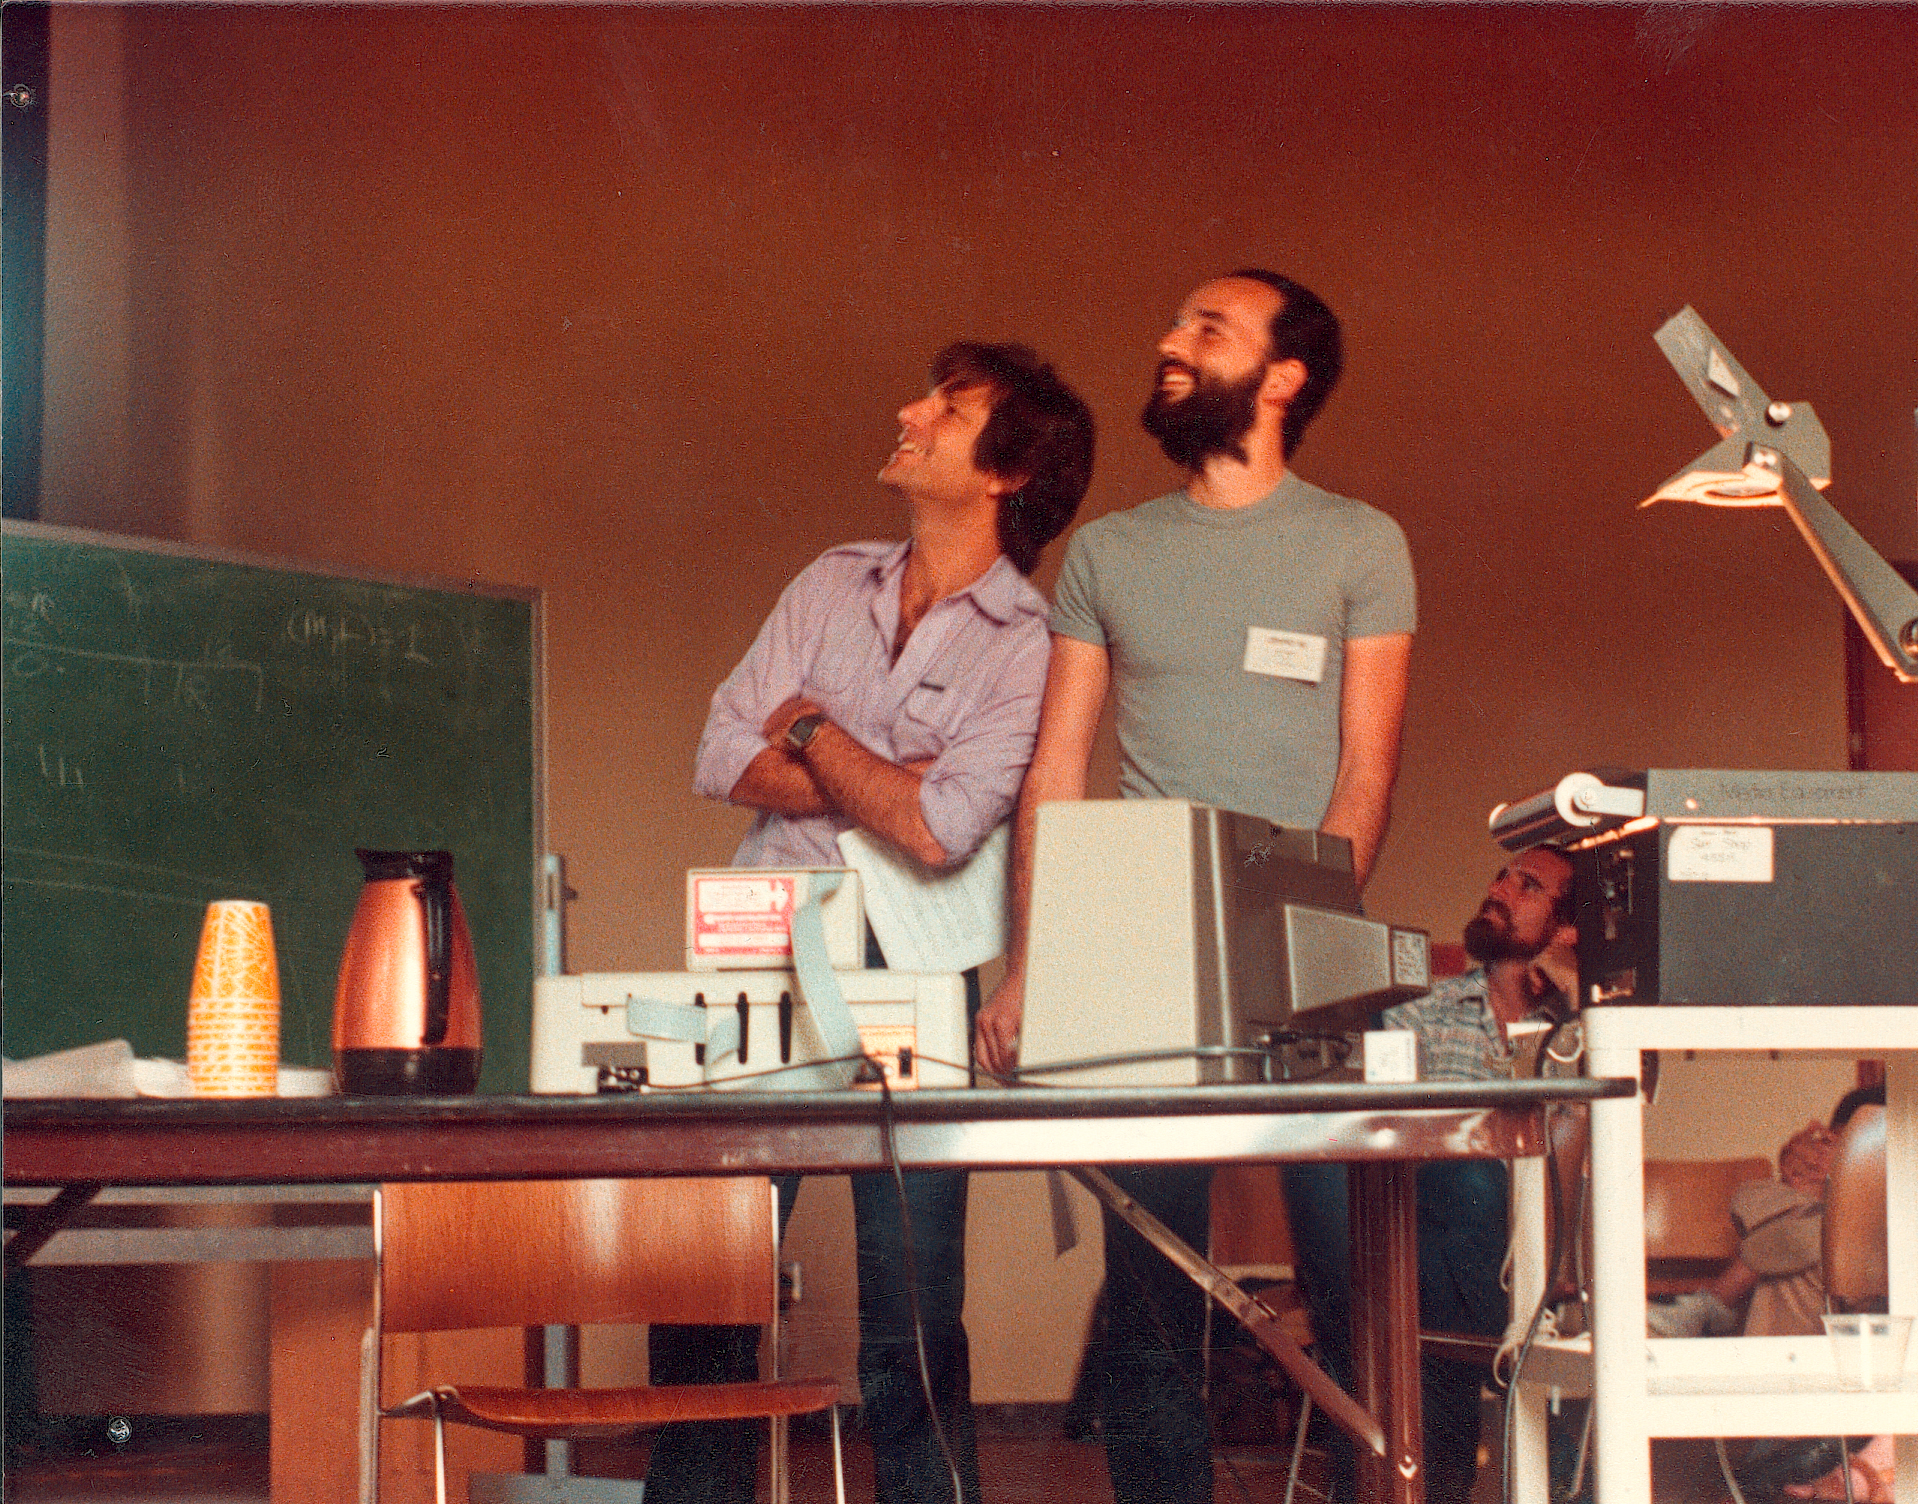 Len and Adi at CRYPTO '82